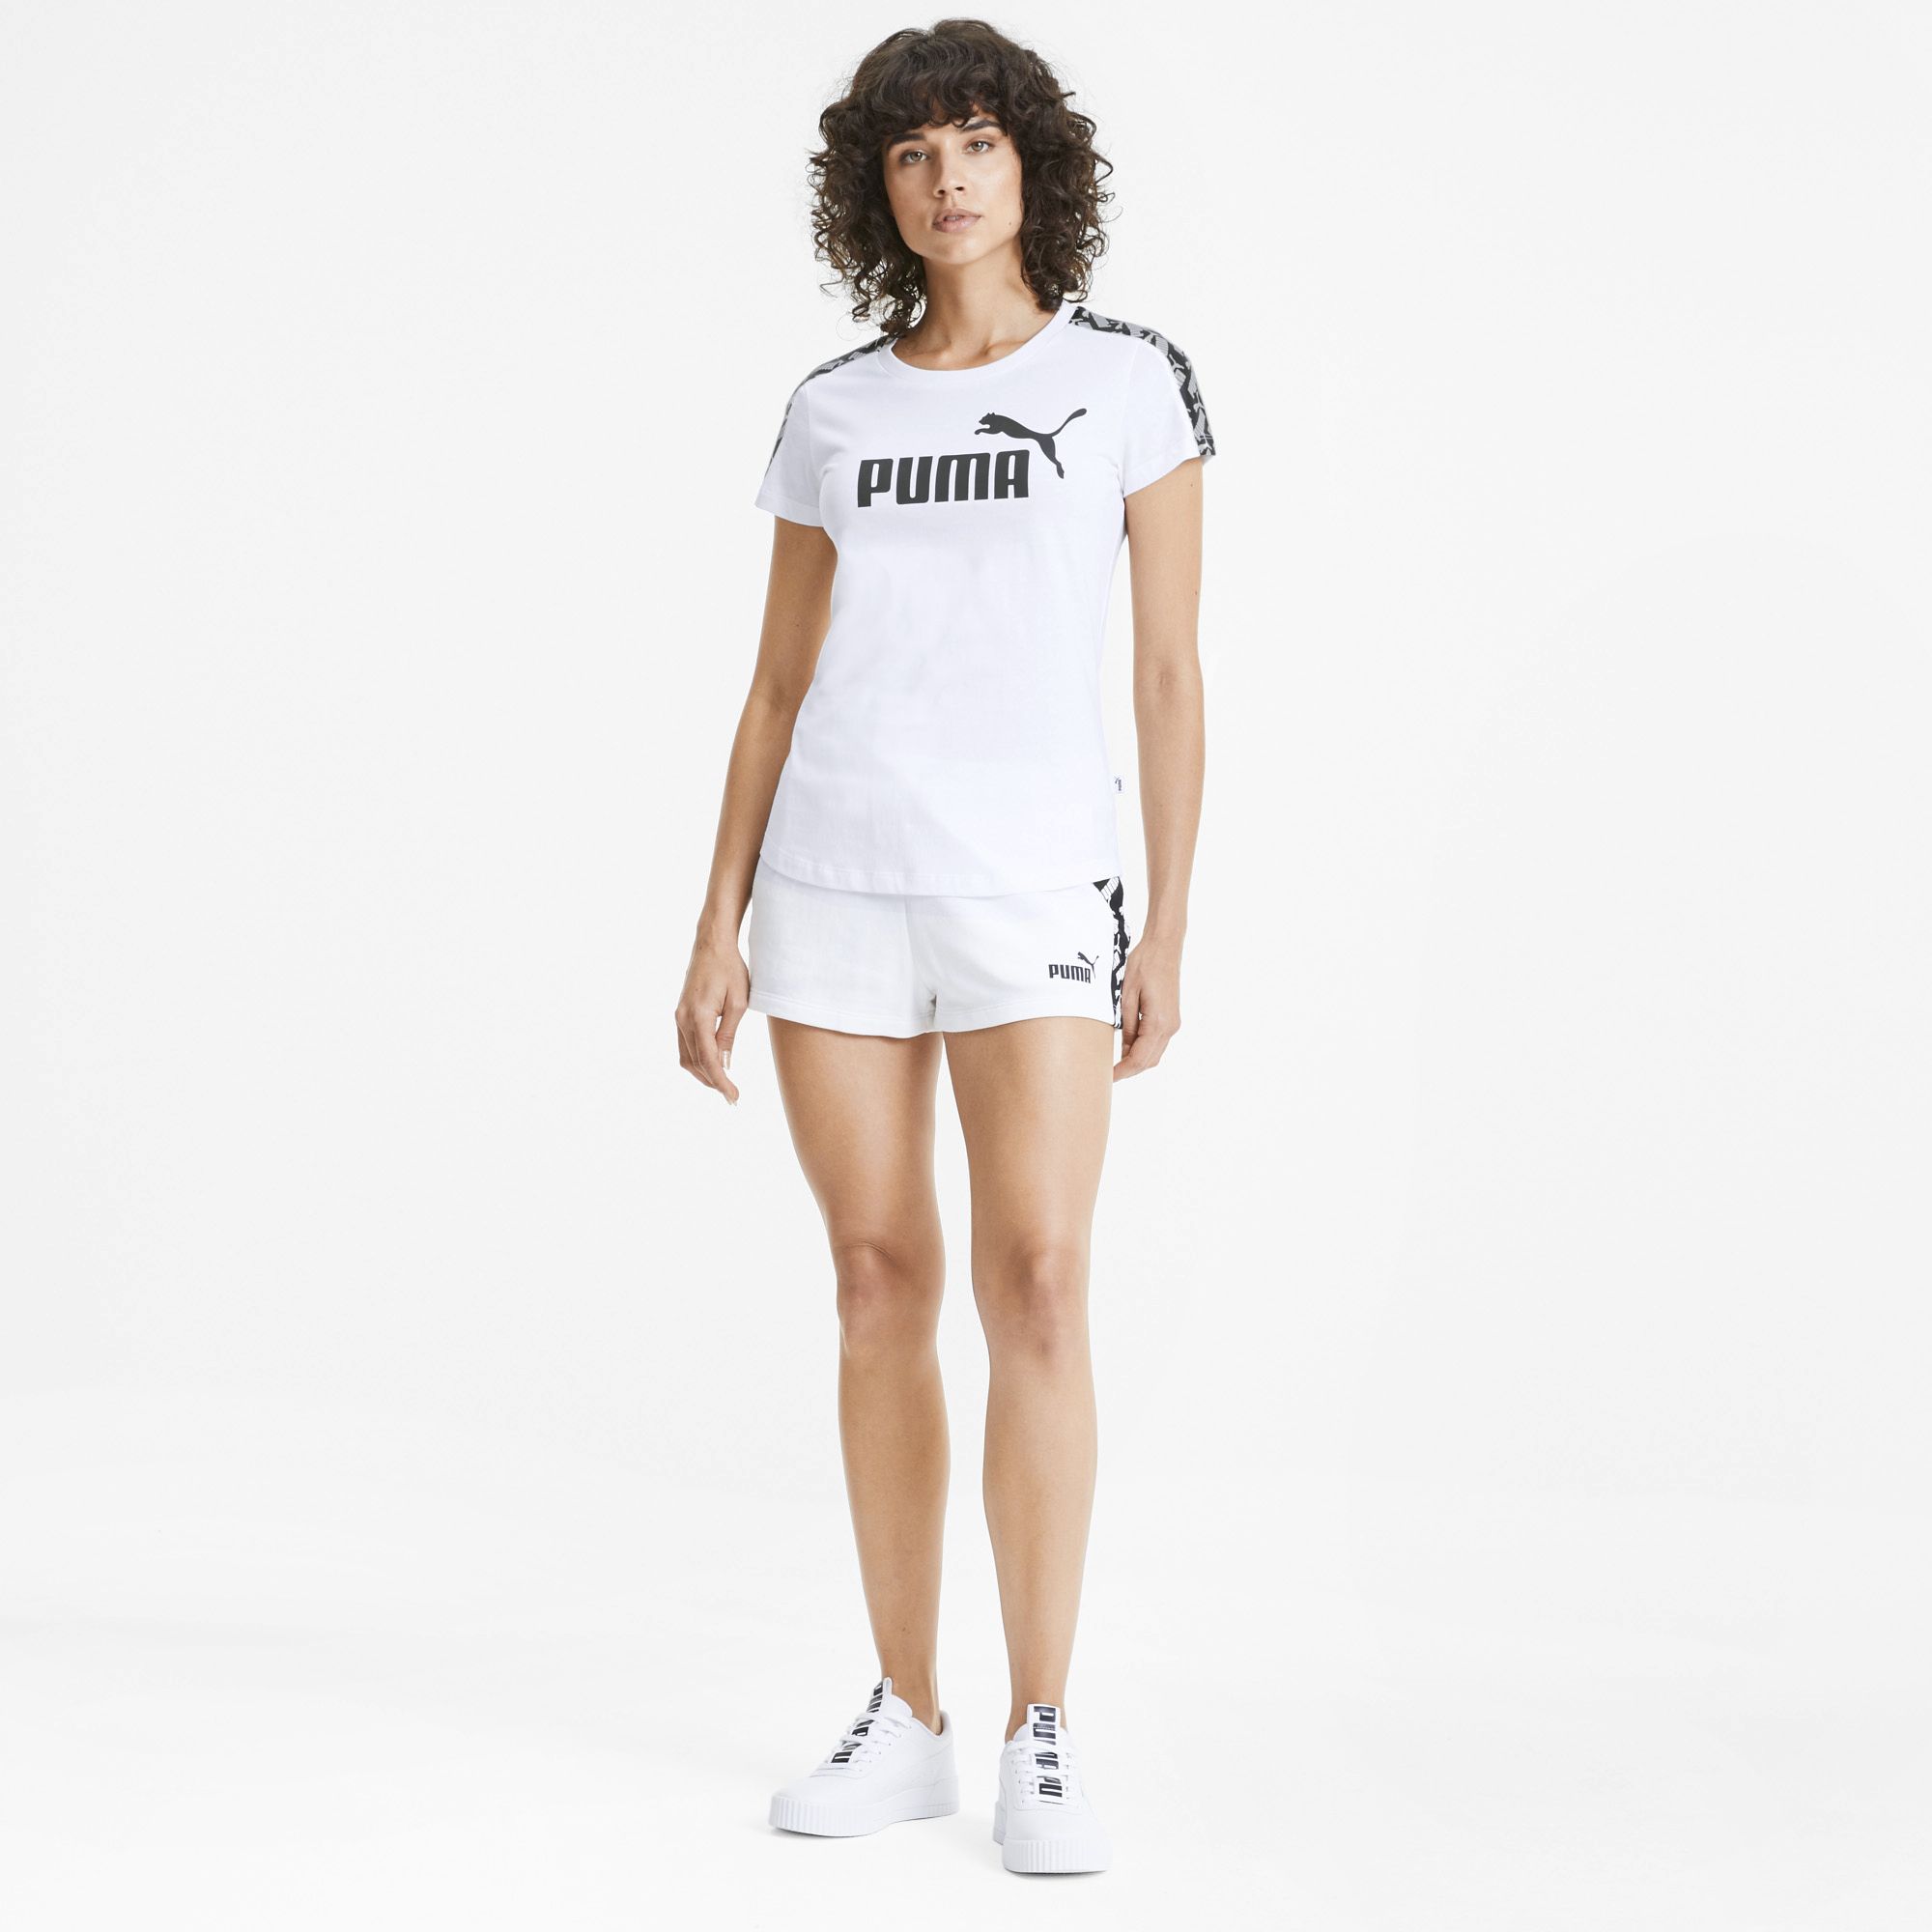 Women’s sports T-shirt